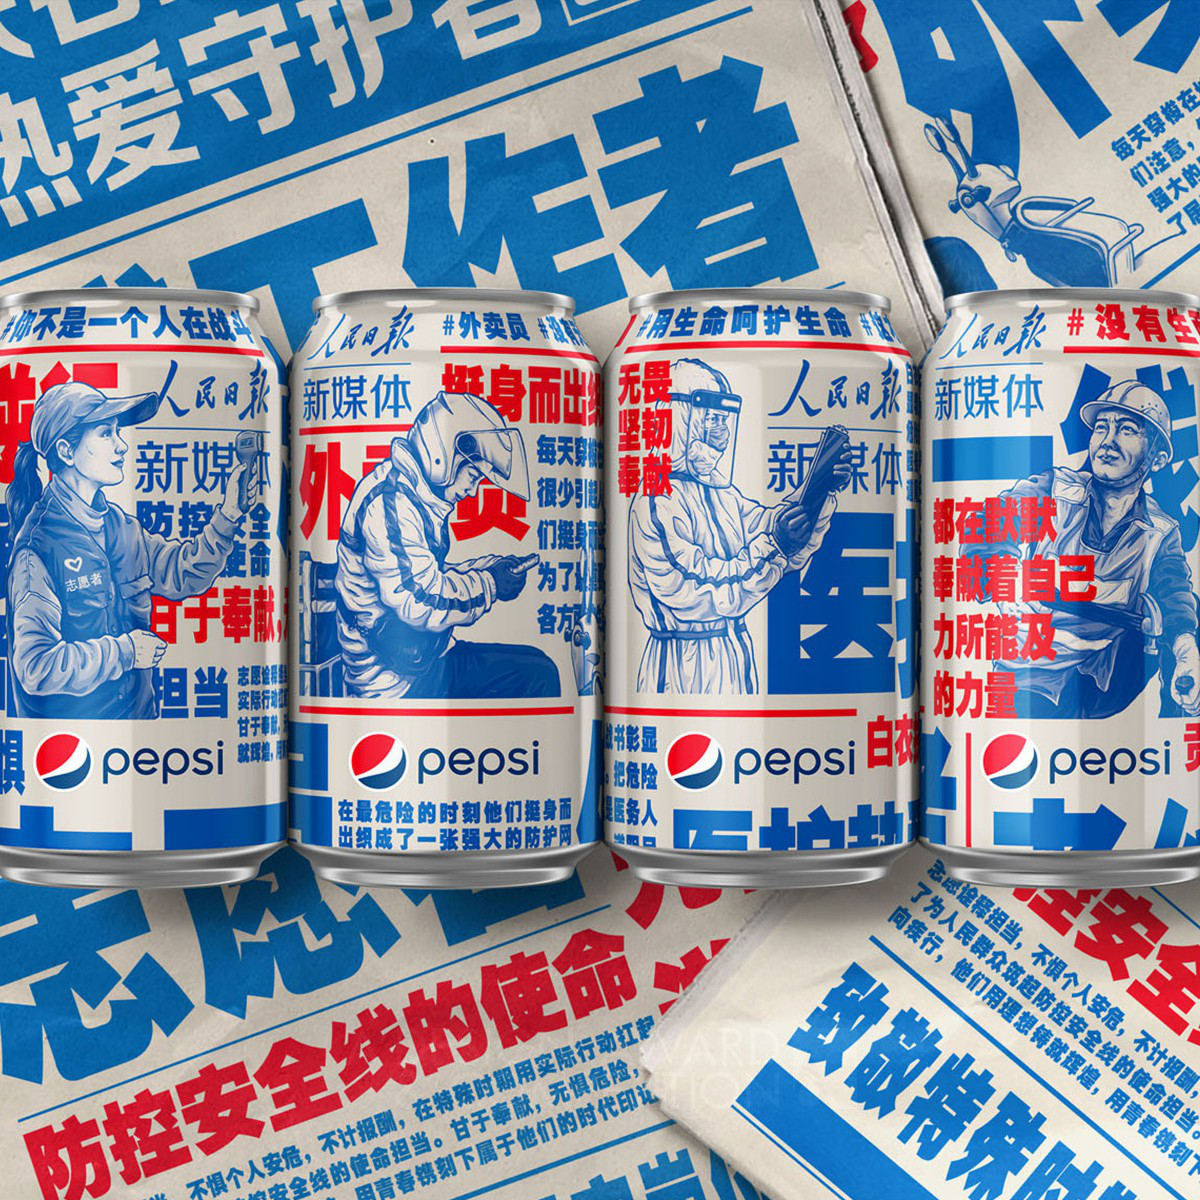 PepsiCo Design & Innovation